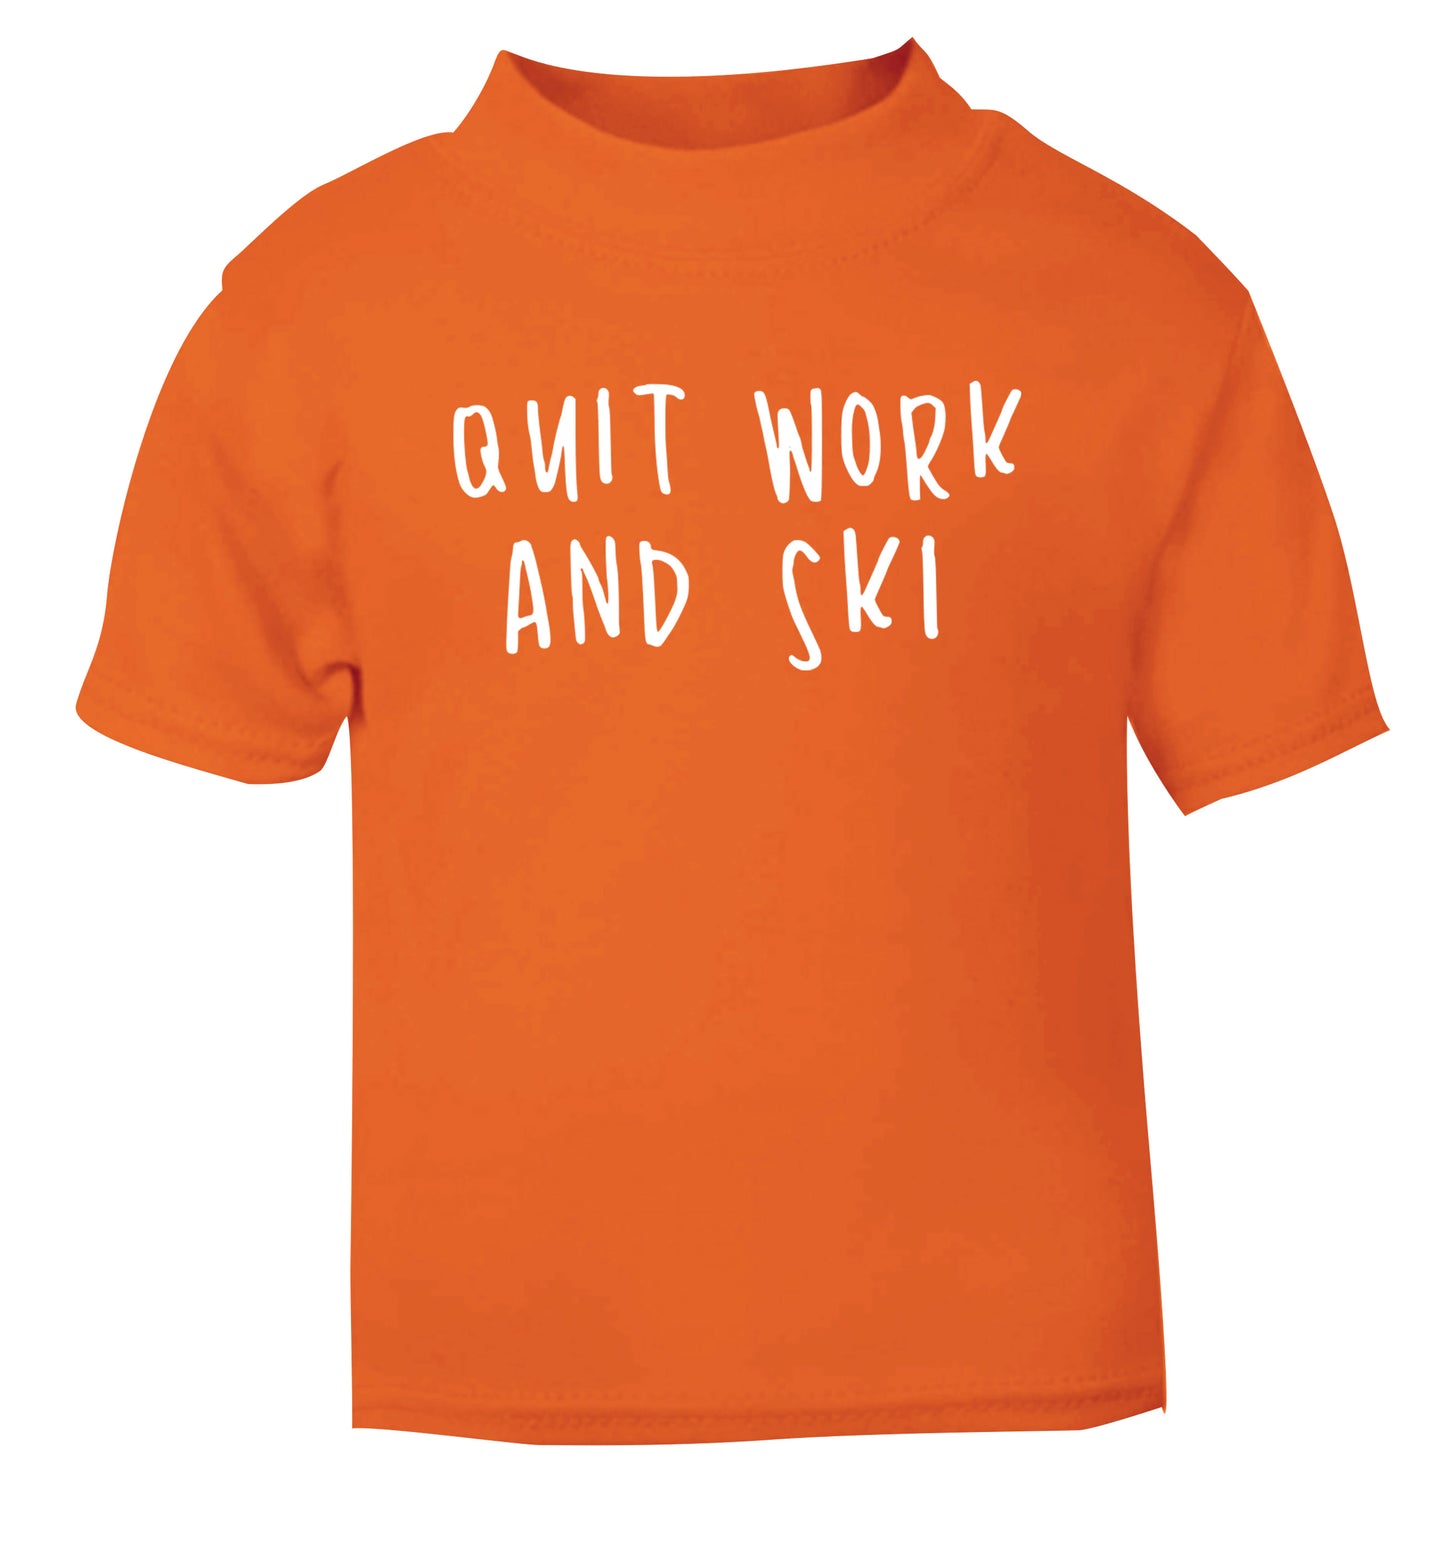 Quit work and ski orange Baby Toddler Tshirt 2 Years